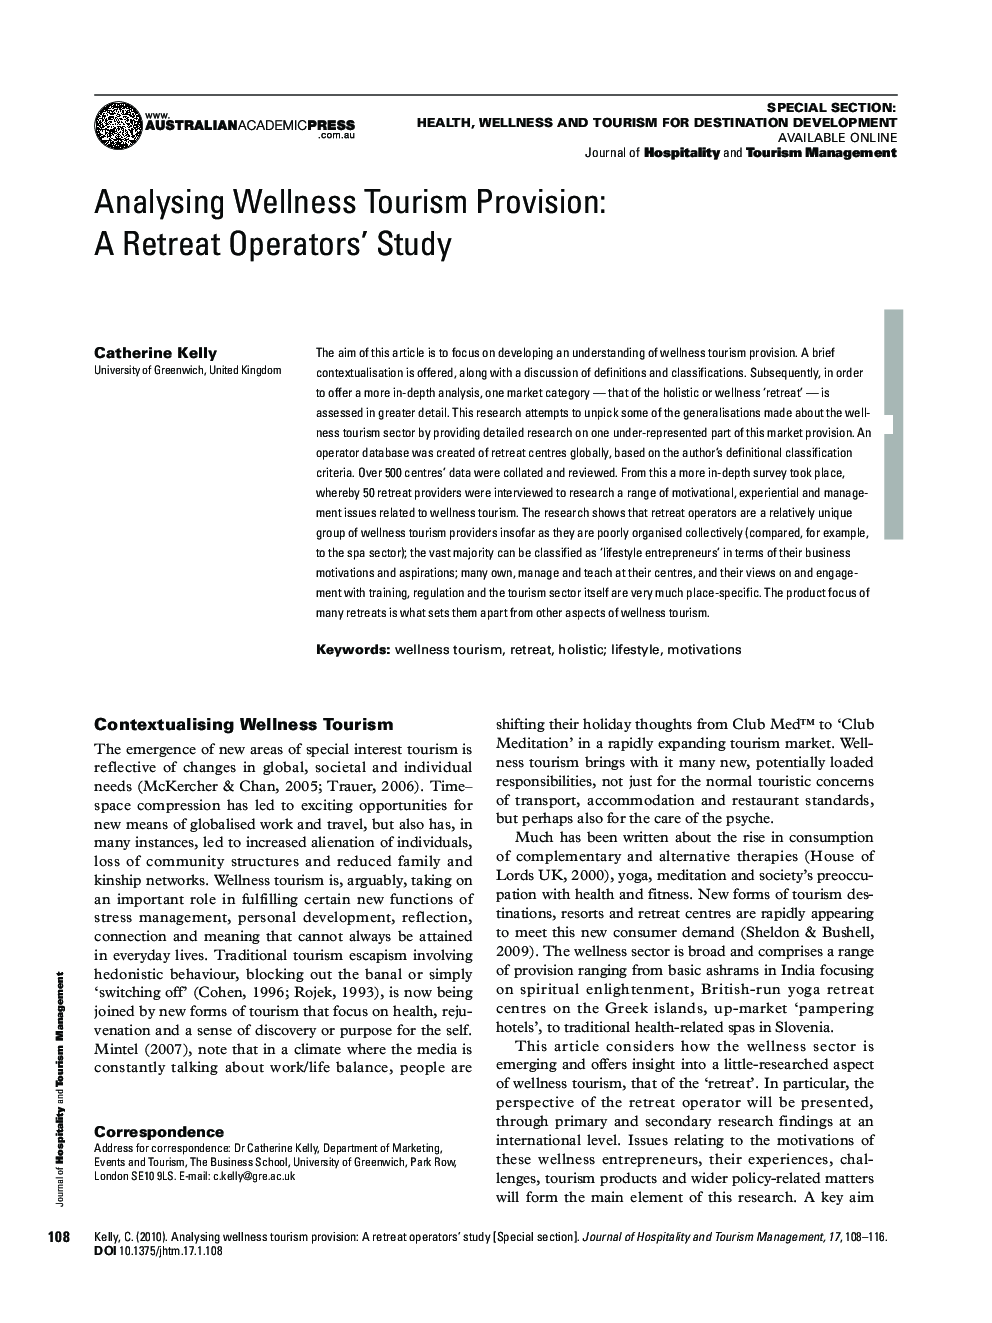 Analysing Wellness Tourism Provision: A Retreat Operators' Study